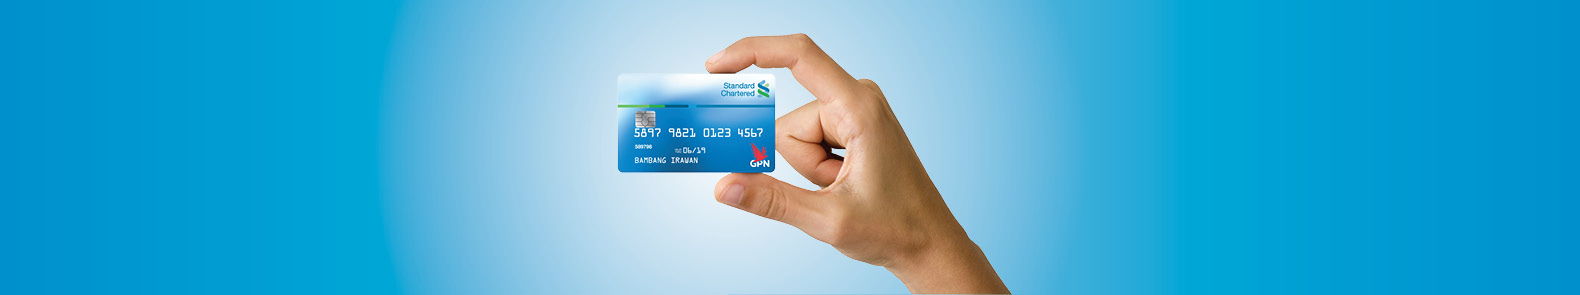 Standard Chartered Bank ‘National Payment Gateway’ National ATM/ Debit Card